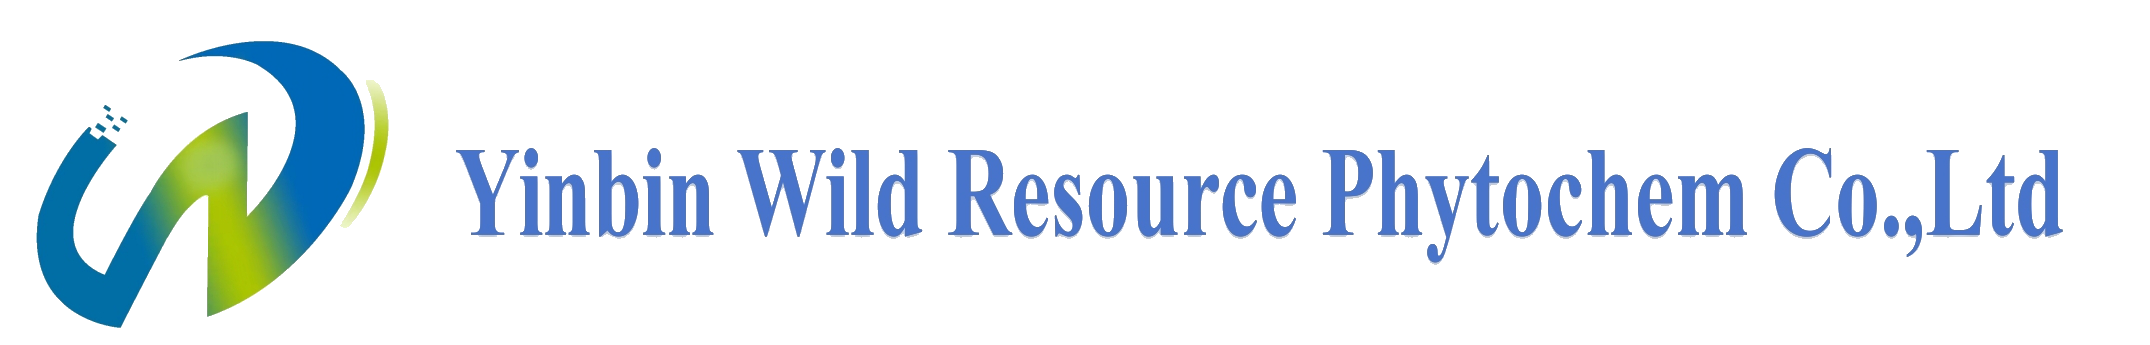 Yinbin Wild Resource Phytochem Co.,Ltd